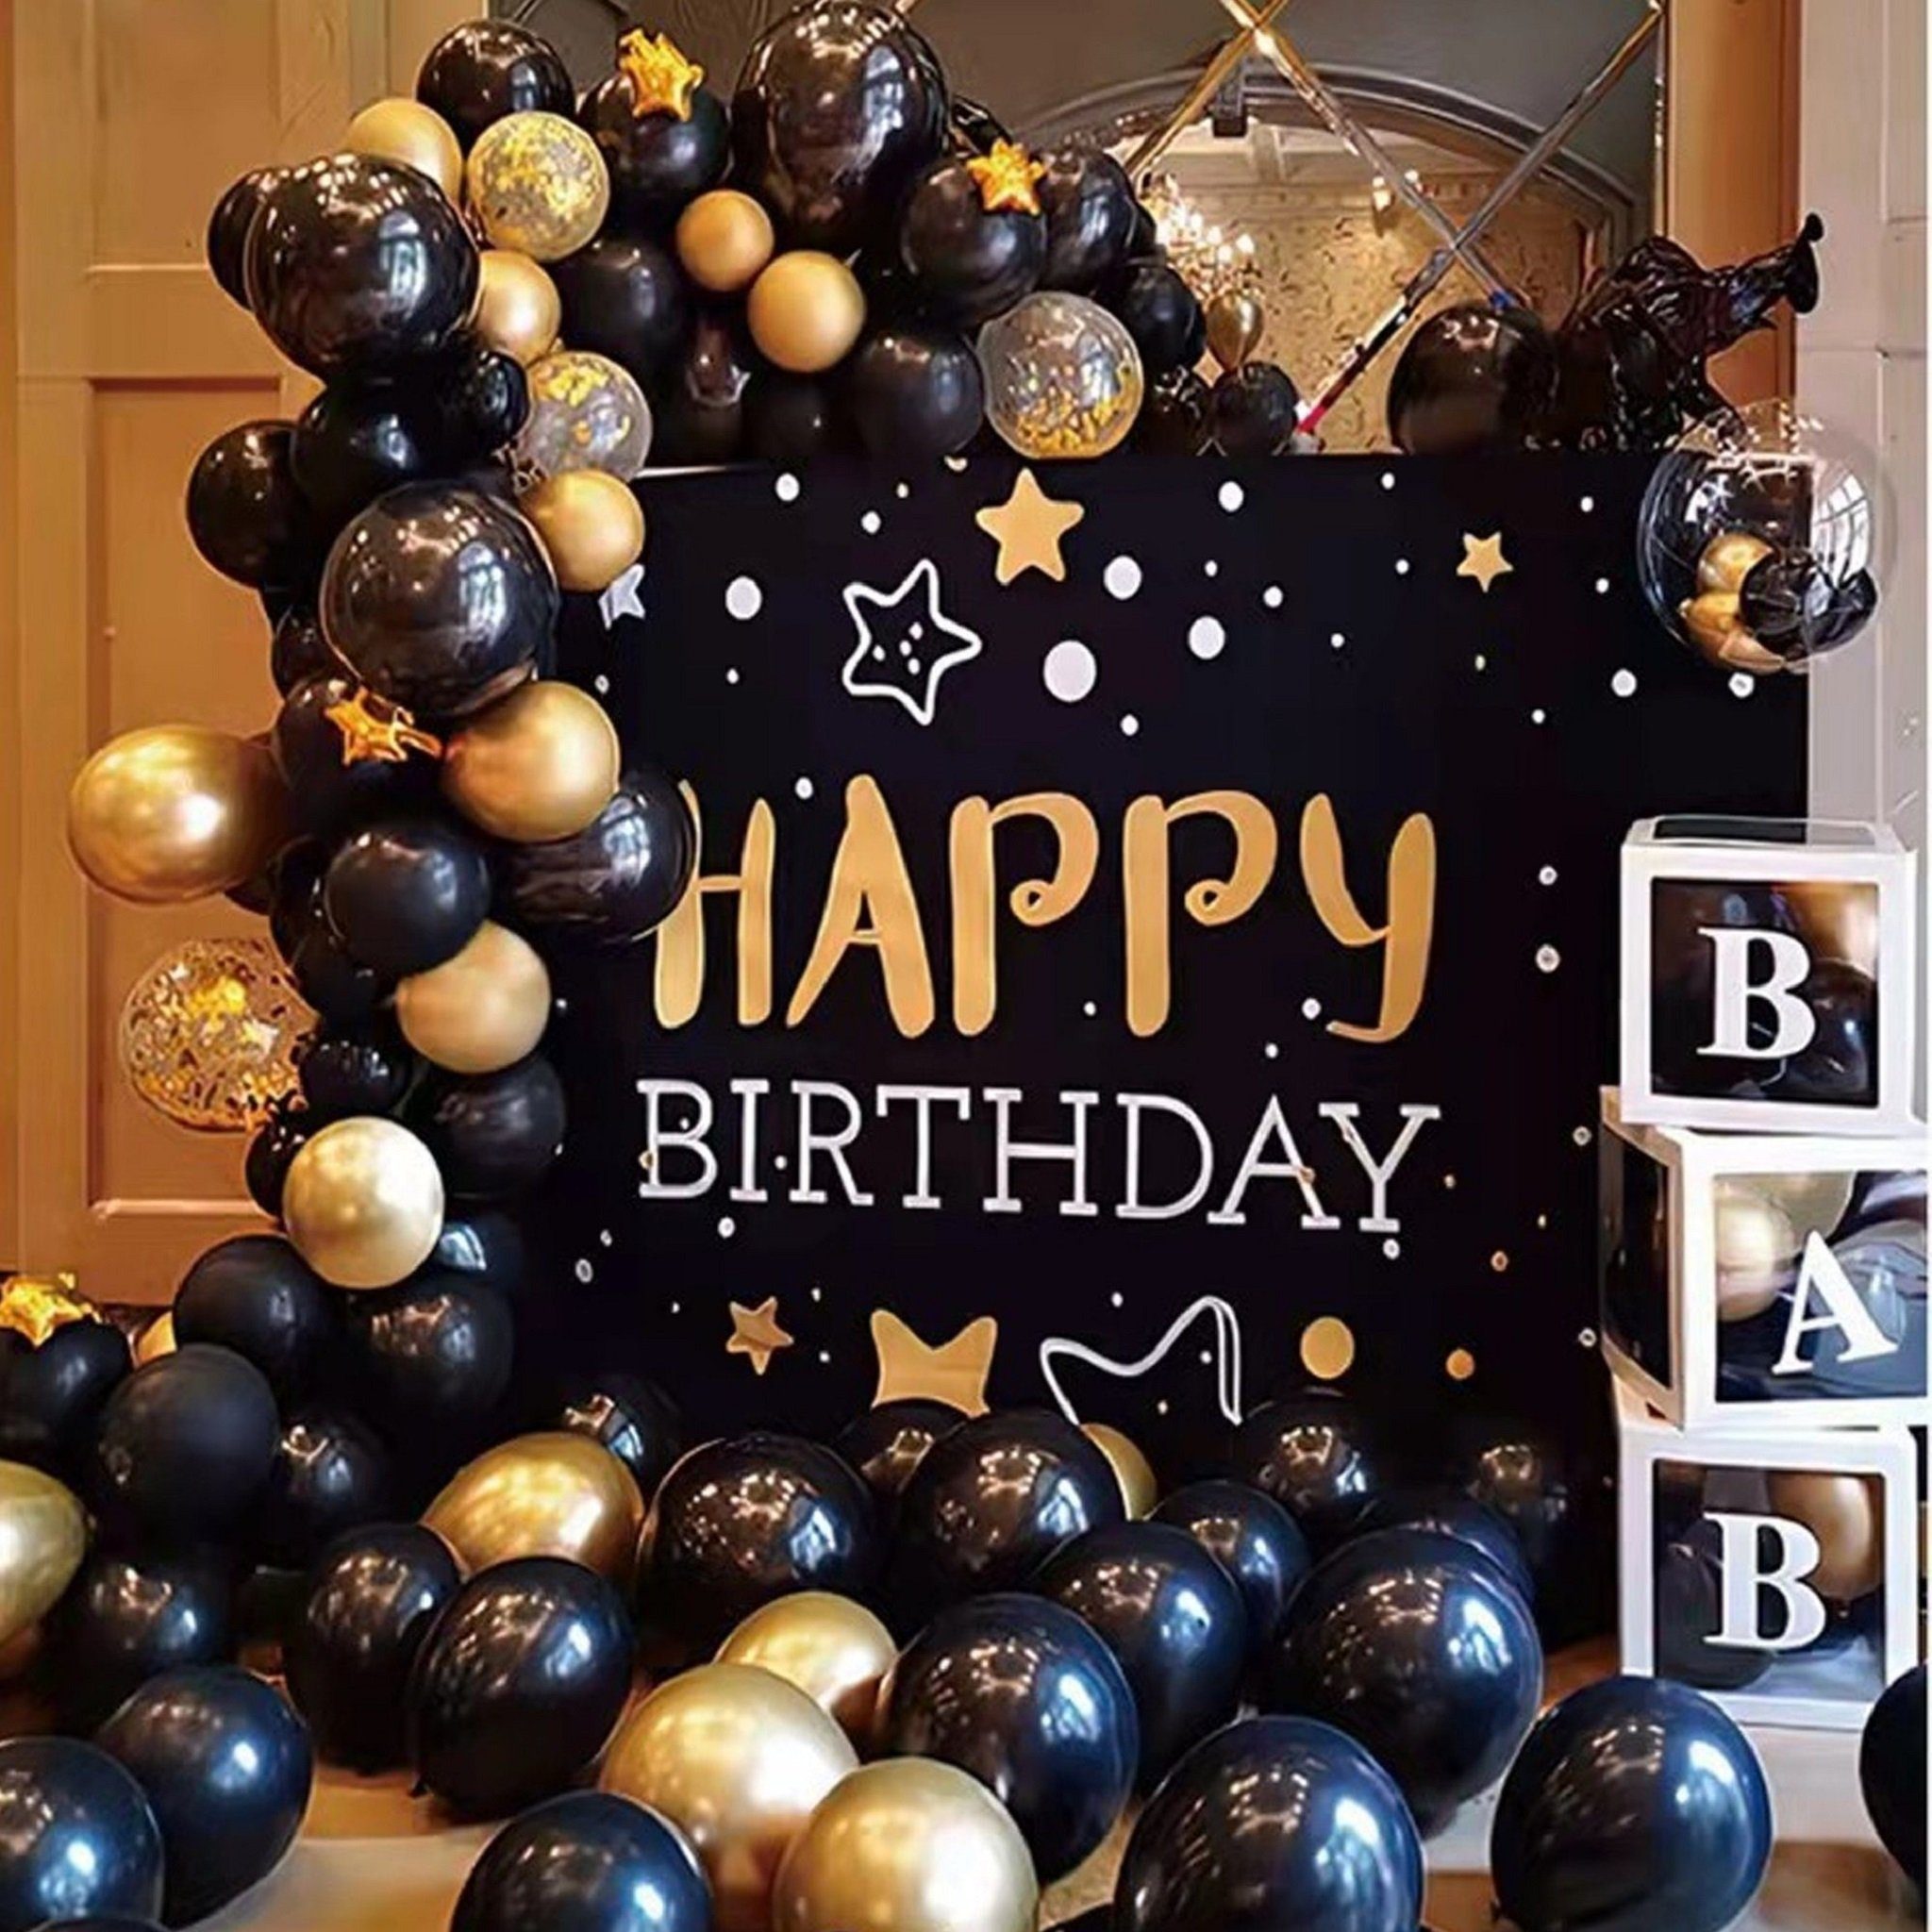 Mutoy Luftballon luftballons geburtstag,Luftballons für Geburtstagsfeier Dekoration, Luftballons Geburtstag Ballons Girlande Deko Helium Gold Weiß Schwarz